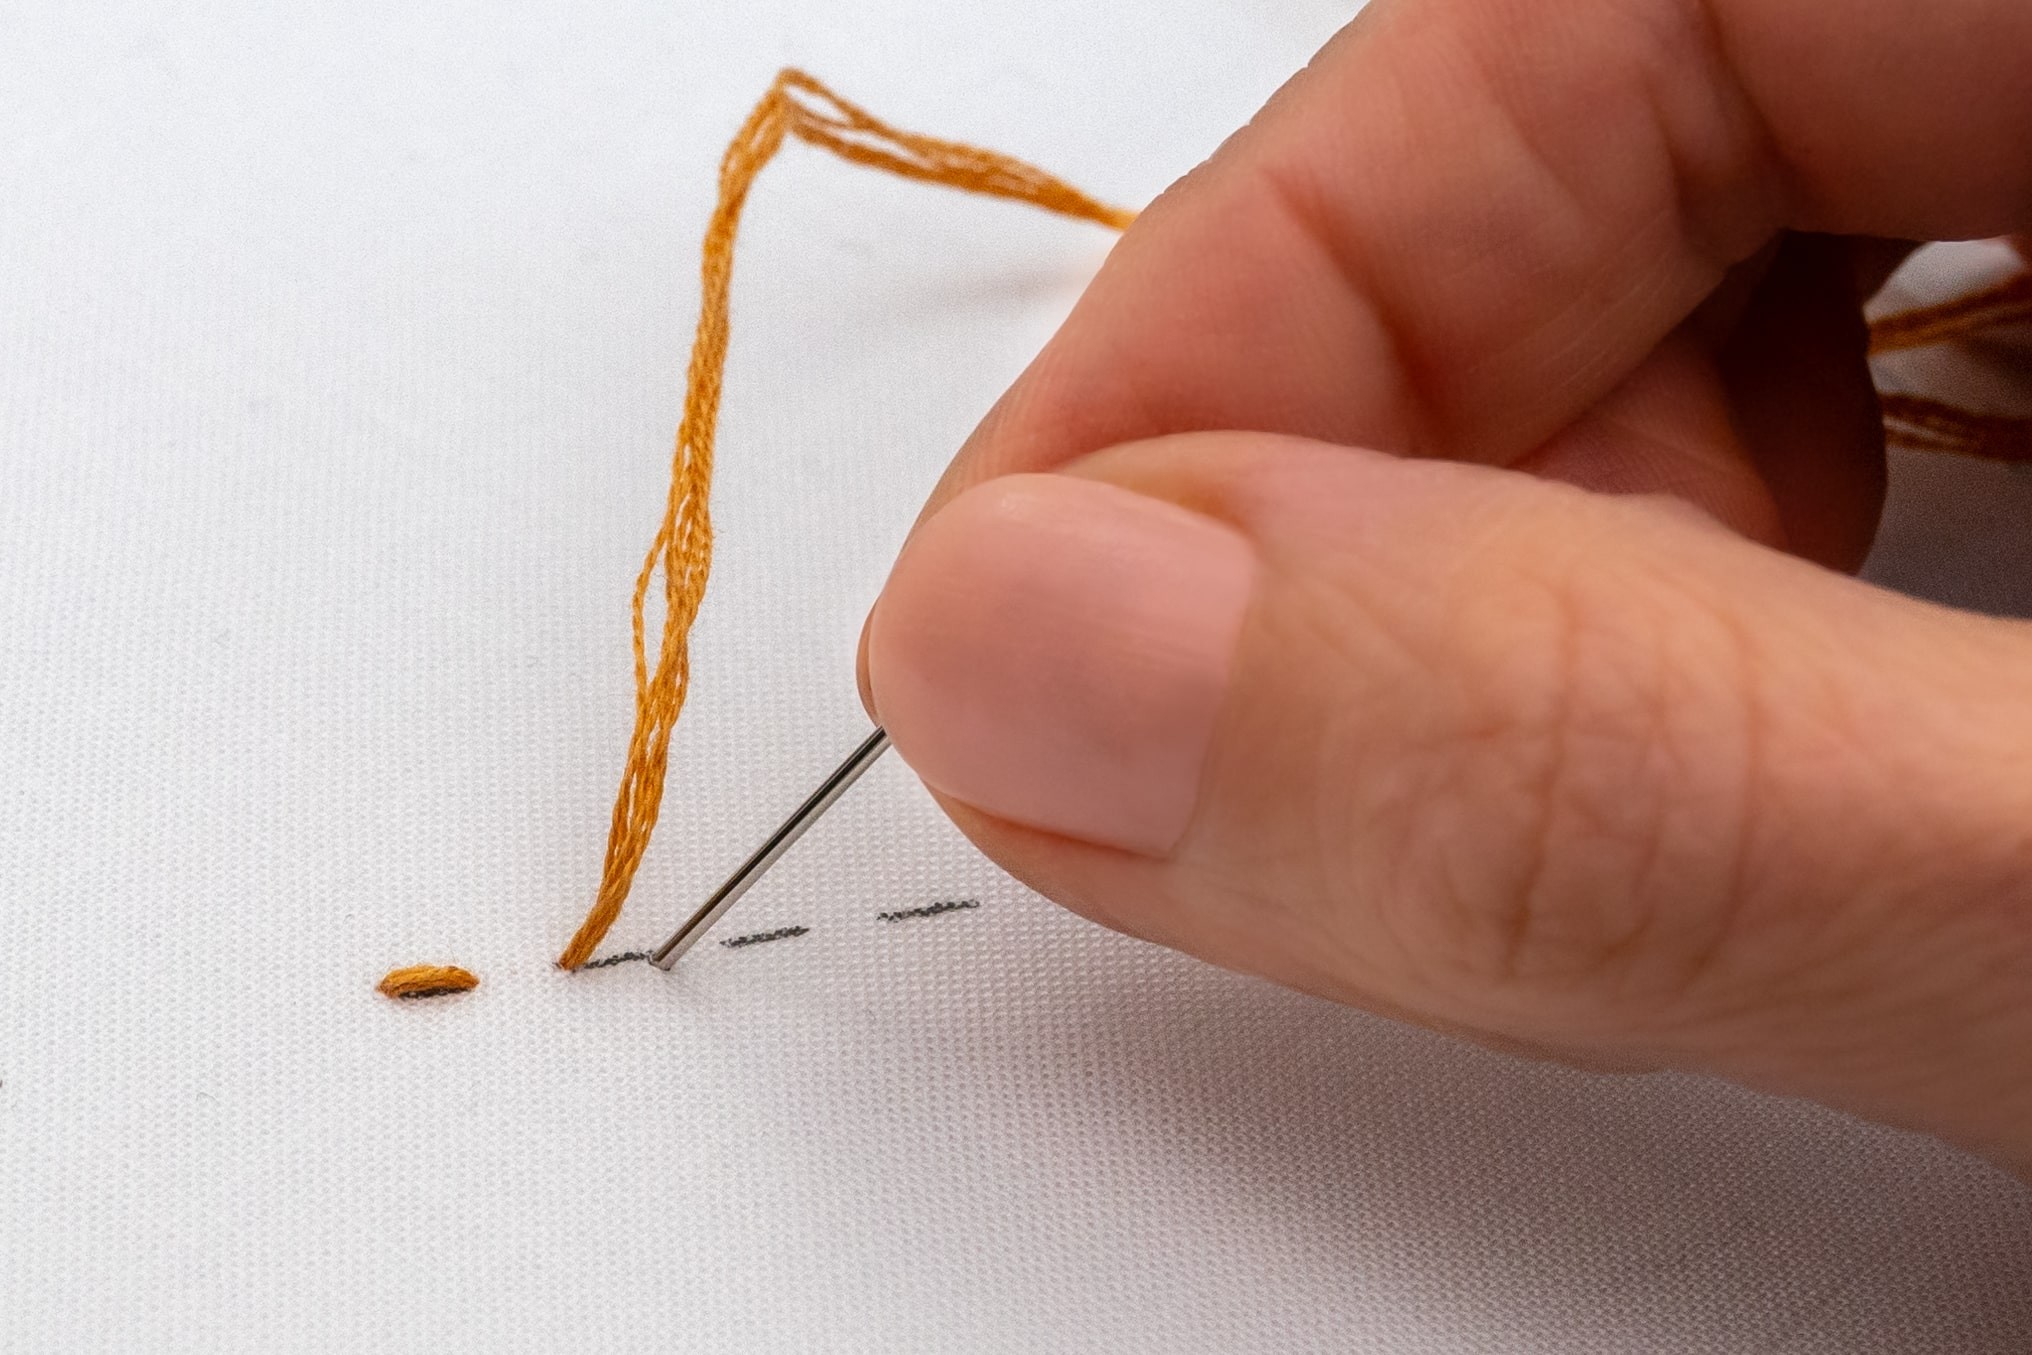 A needle pokes down a stitch-length ahead.